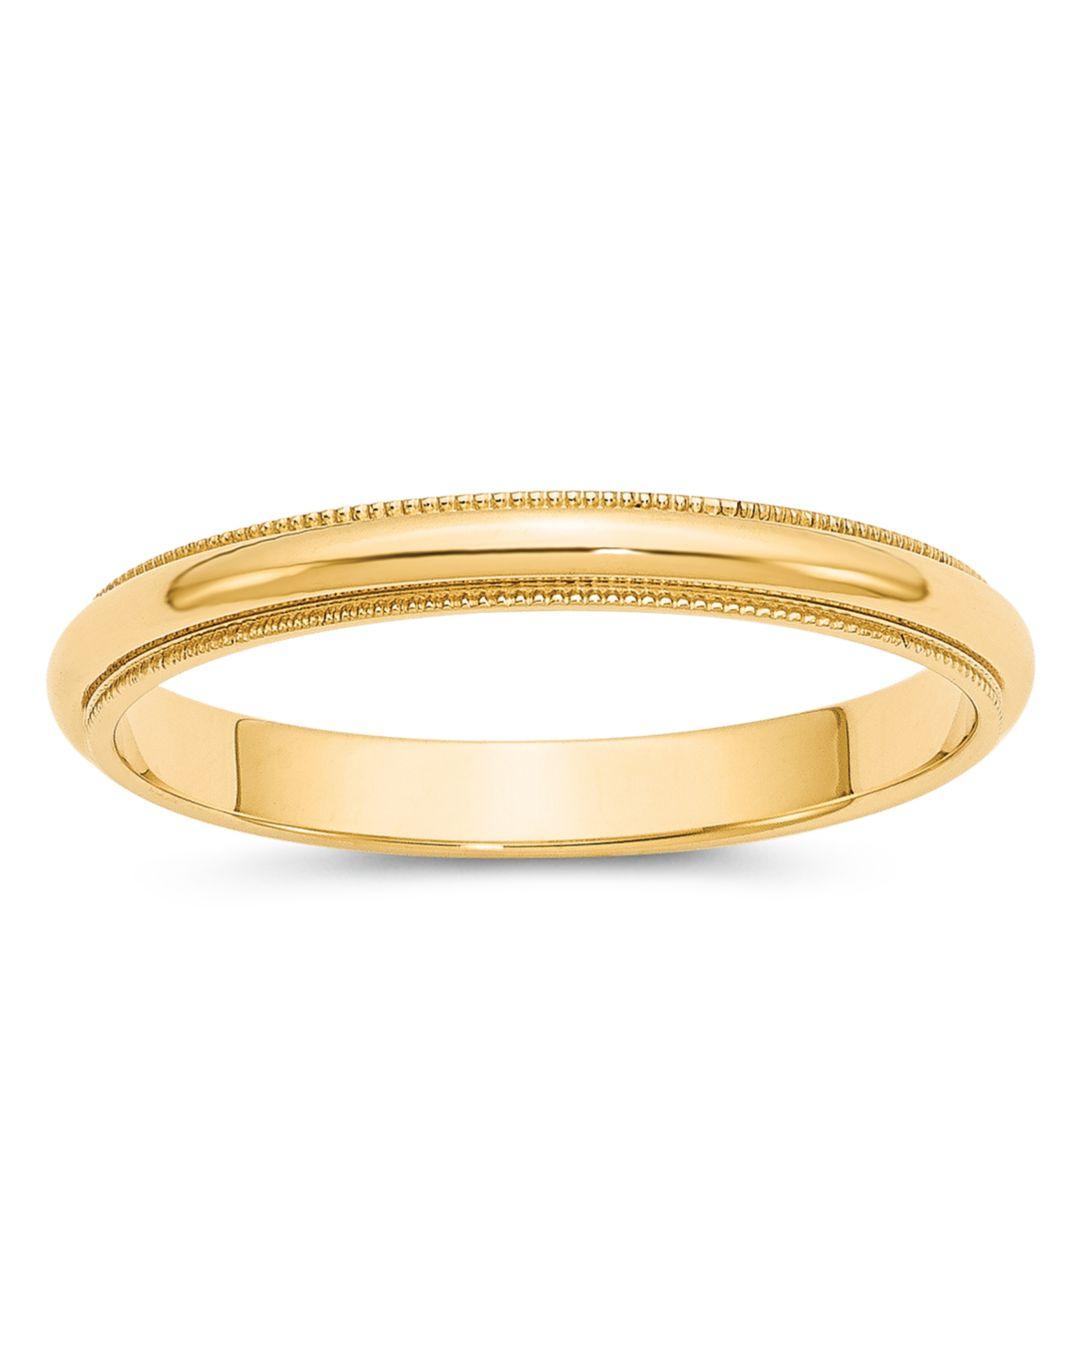 Mens 14K White Gold 3mm Edged Half Round Wedding Band Ring 